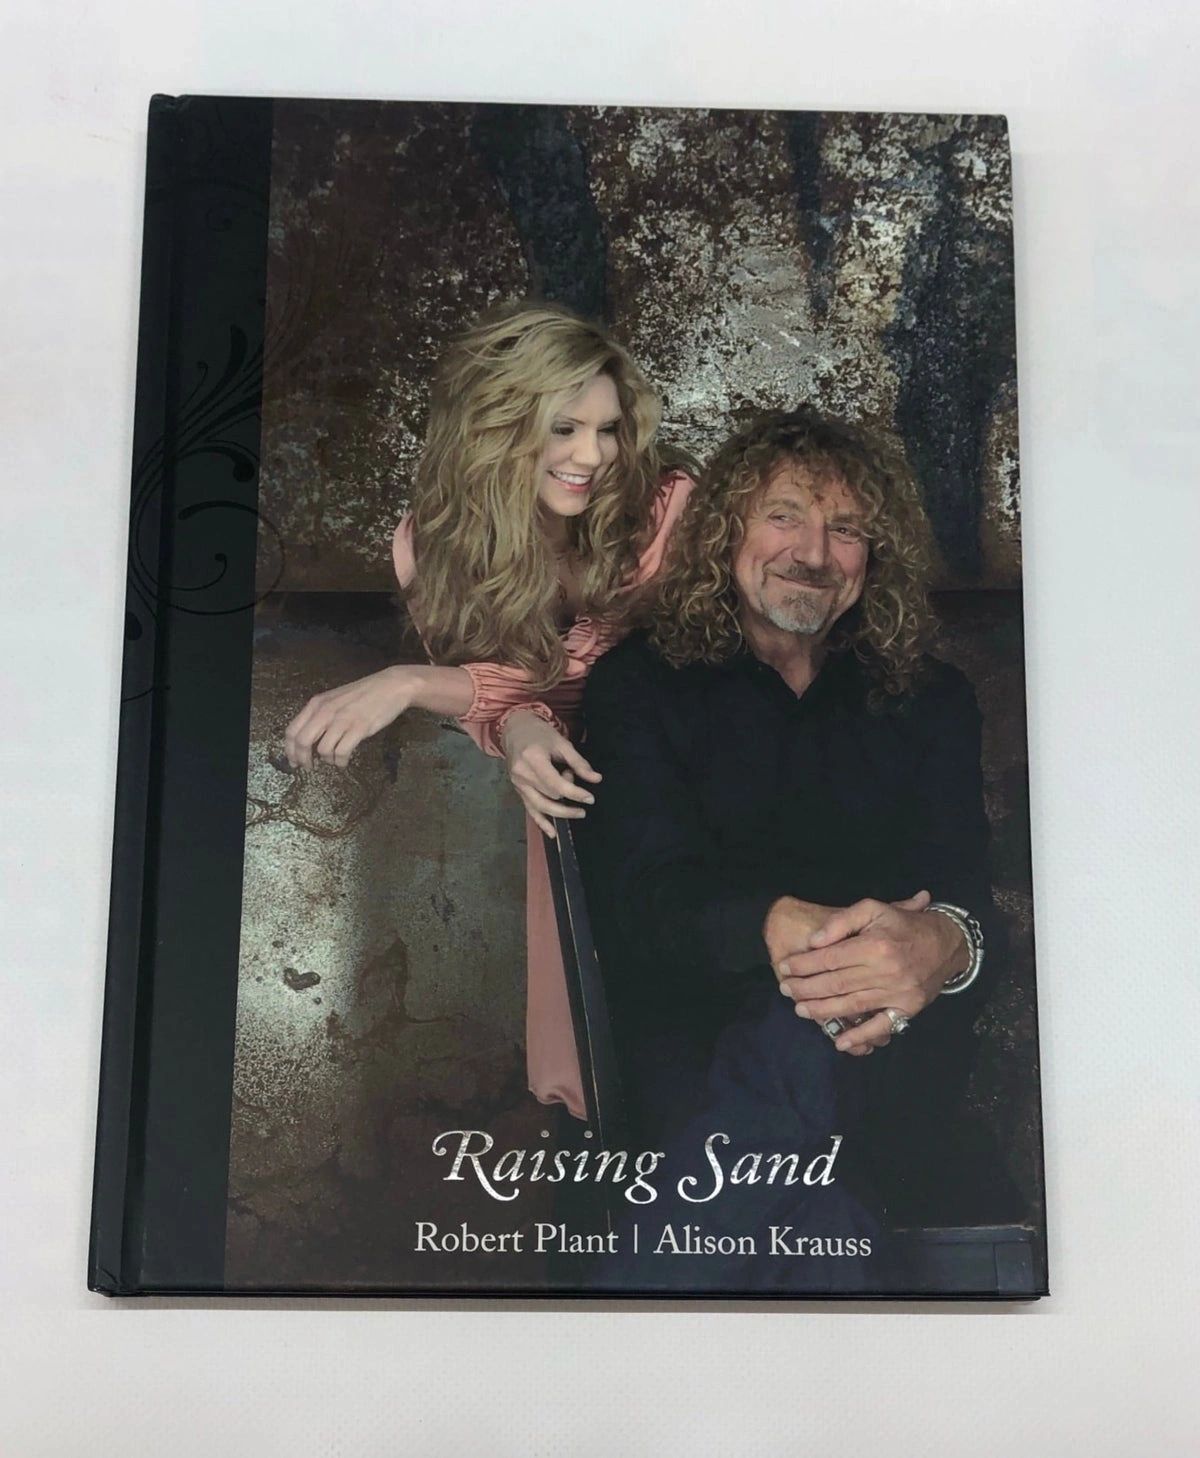 Robert Plant & Alison Krauss Tour Book